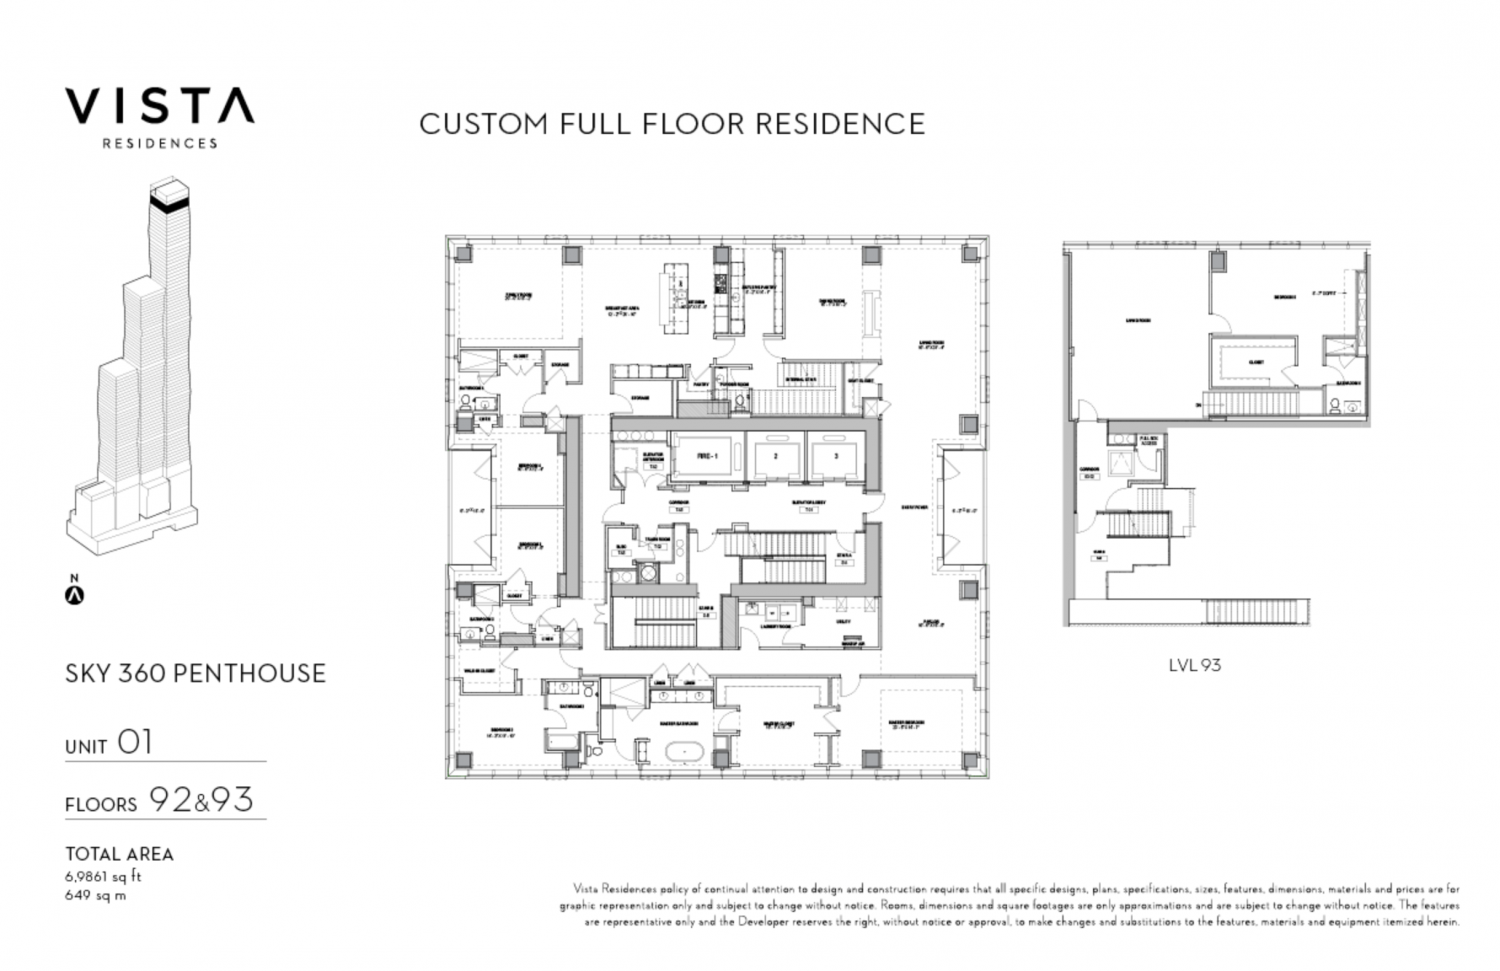 St. Regis Chicago sample penthouse floor plan